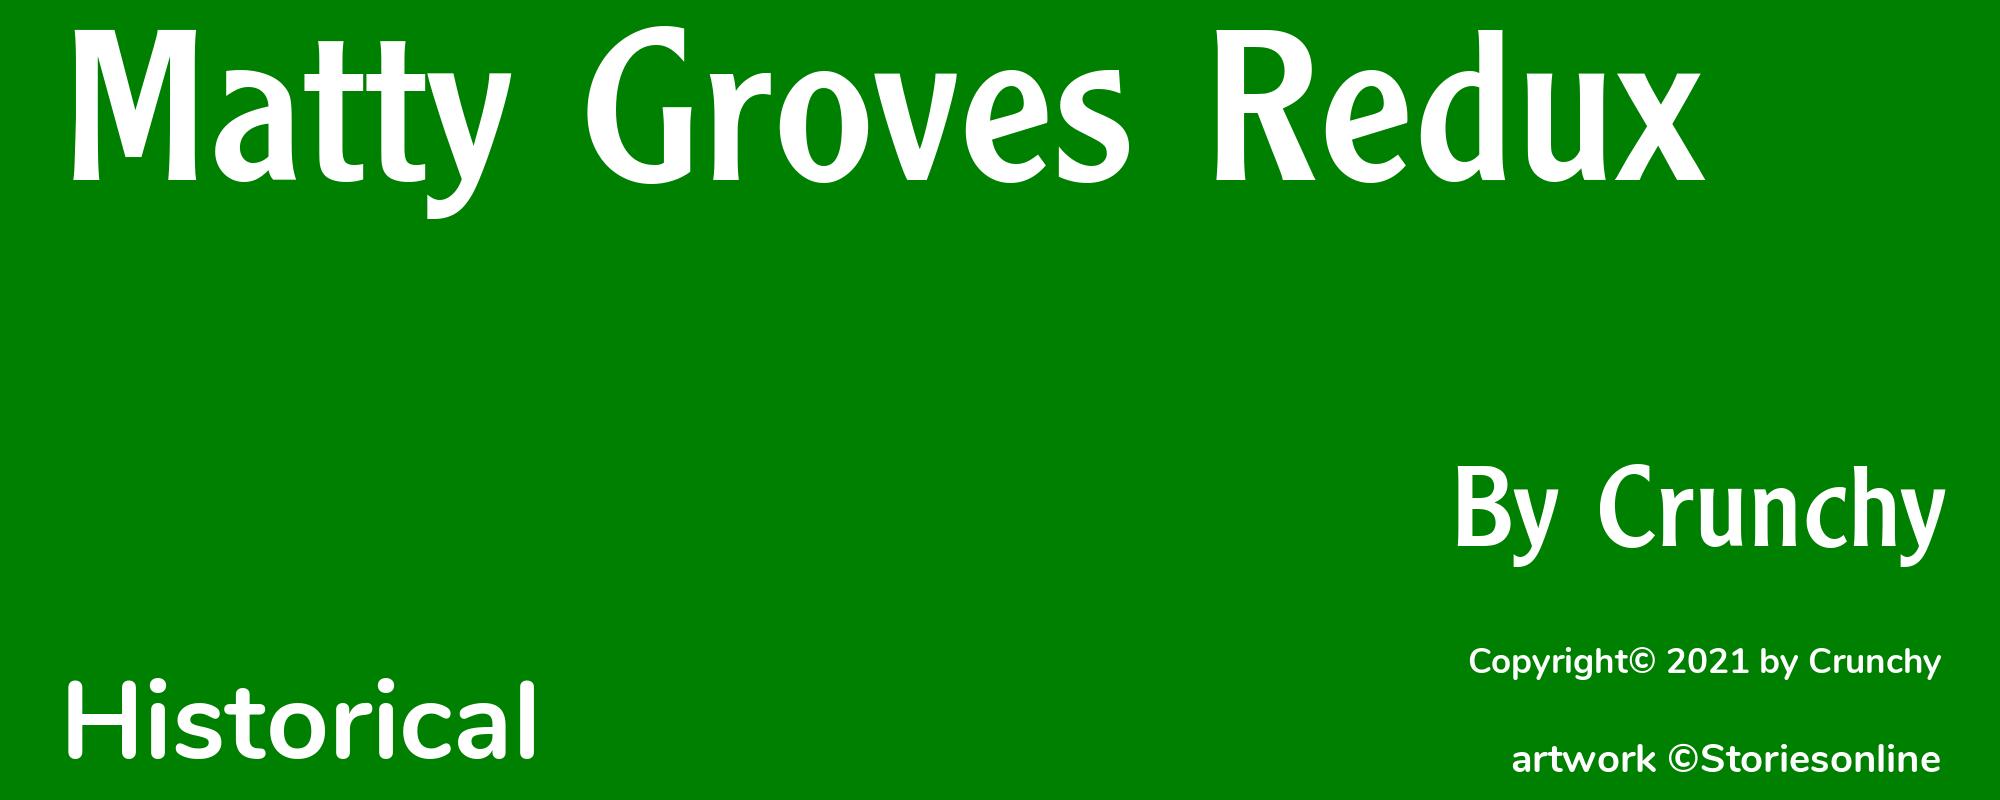 Matty Groves Redux - Cover